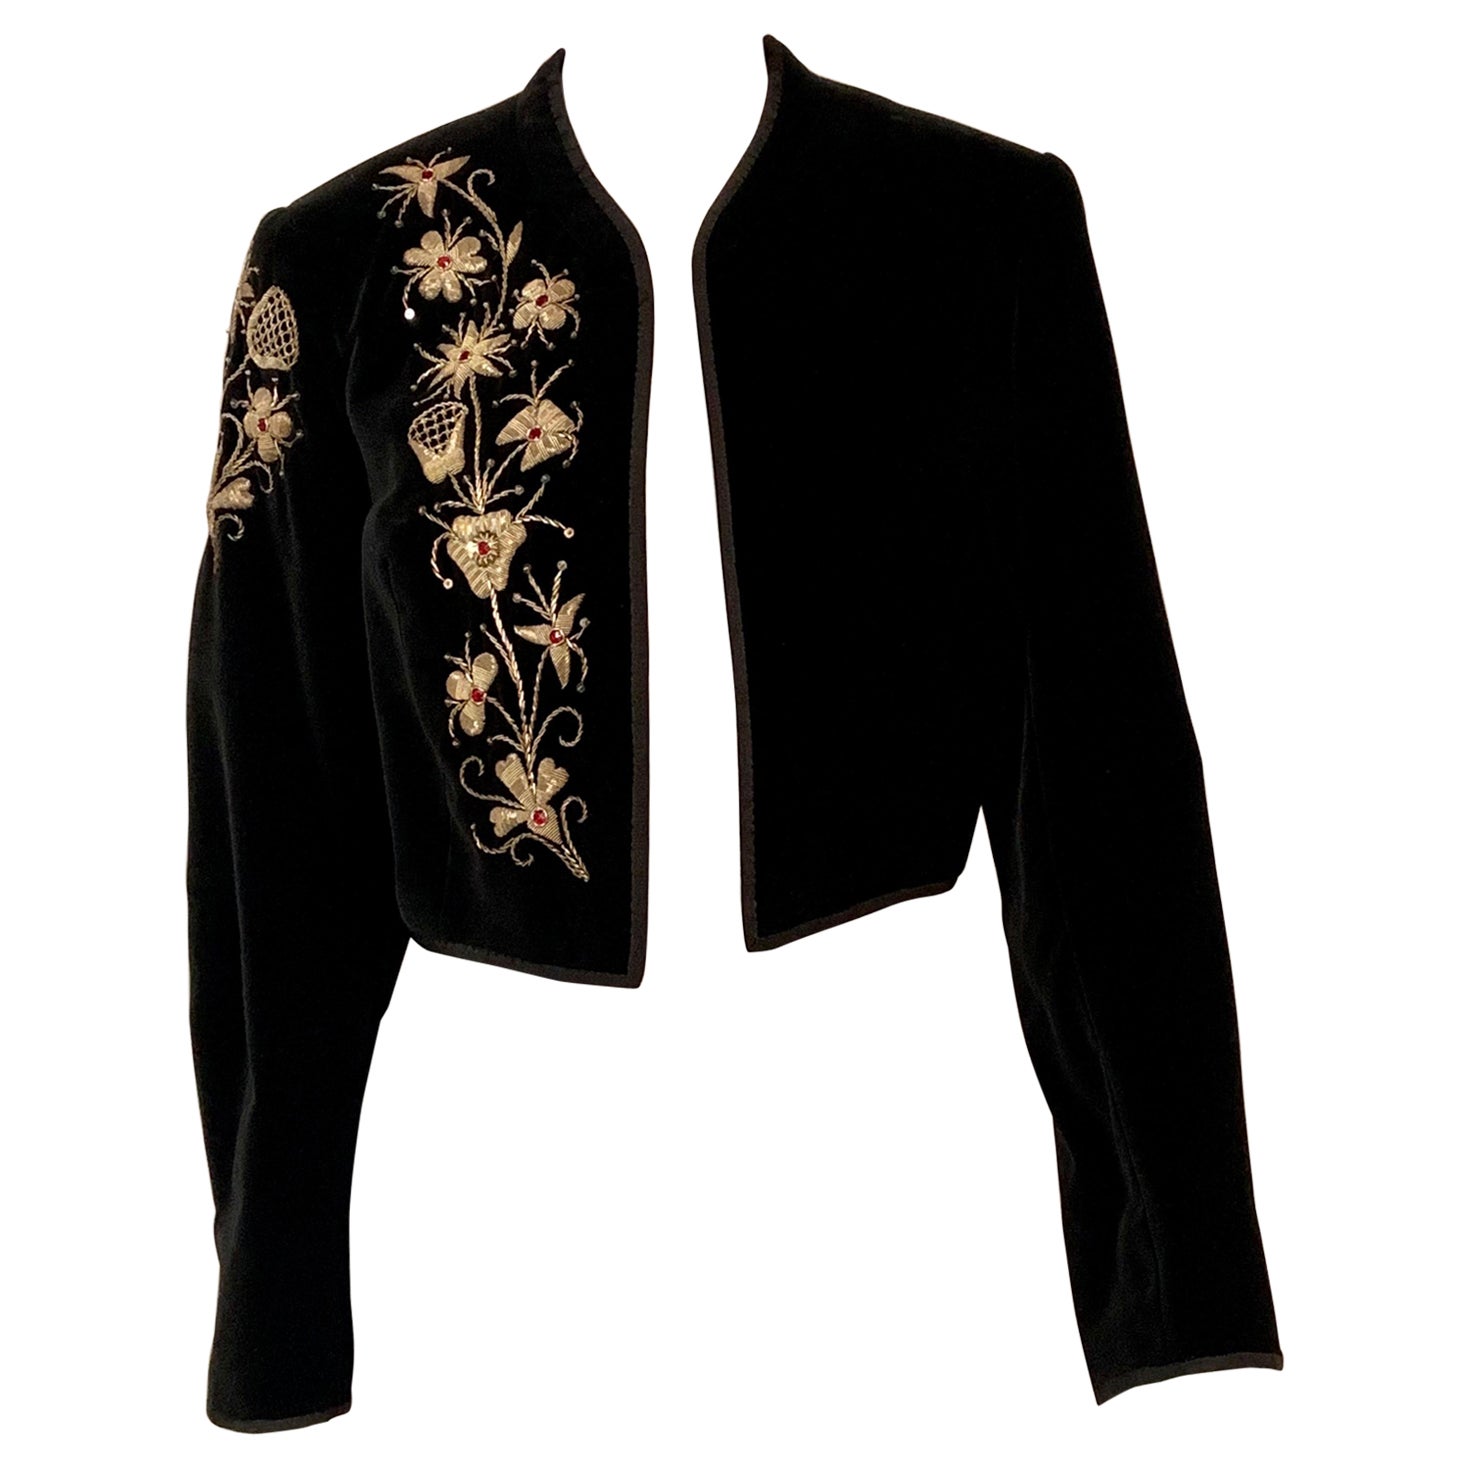 Spanish Made Black Velvet Bolero Jacket with Gold Bullion Embroidery For Sale